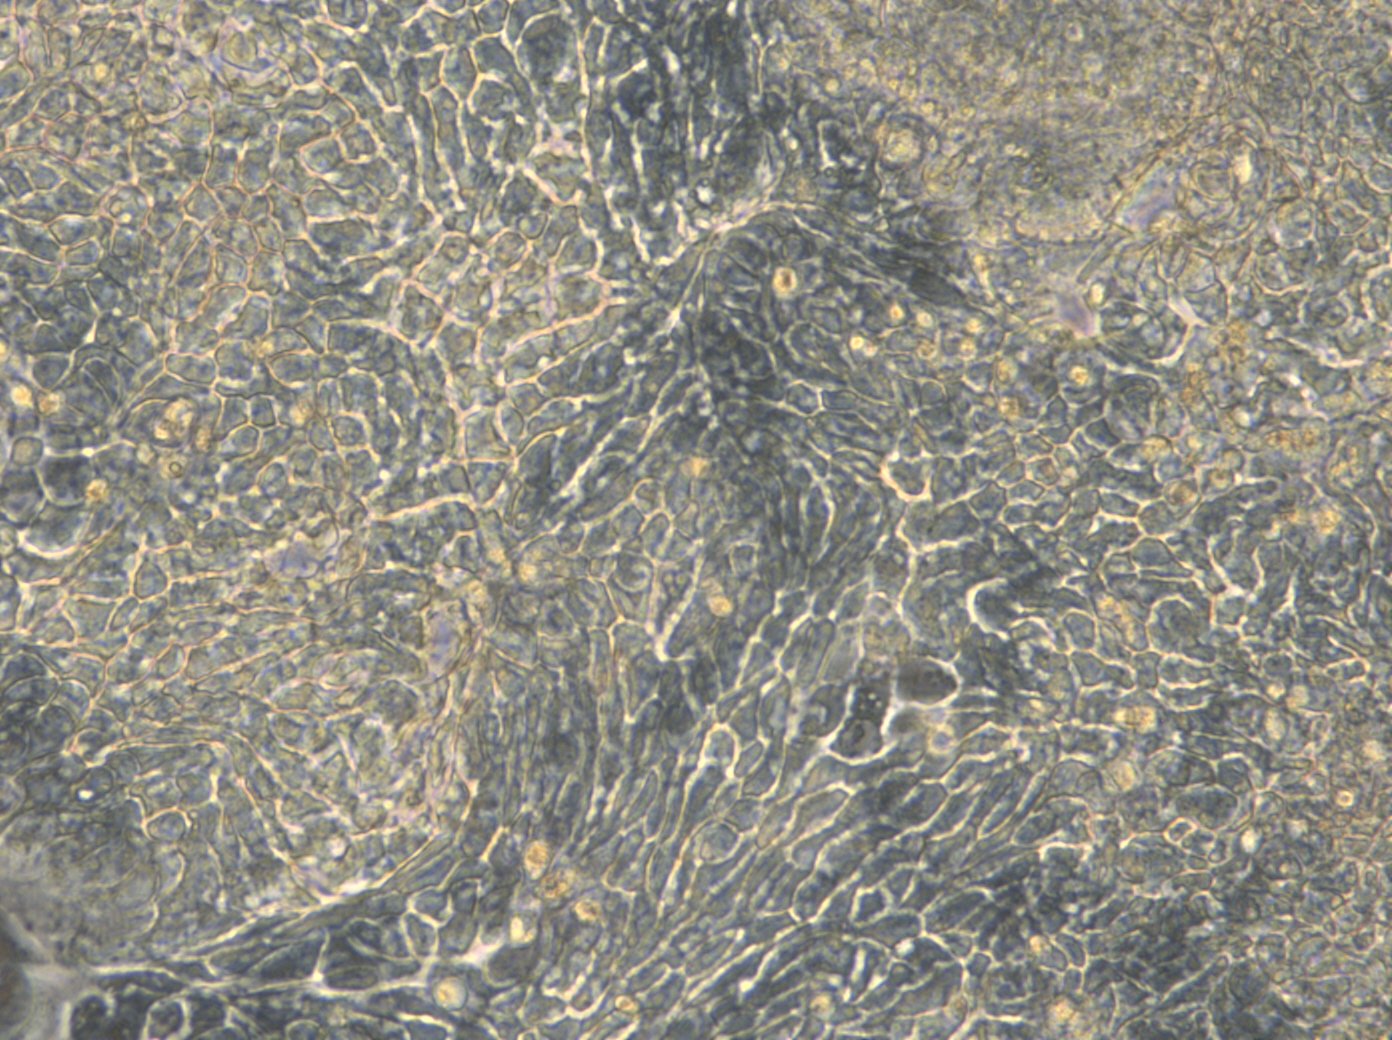 HROC183-Zellen